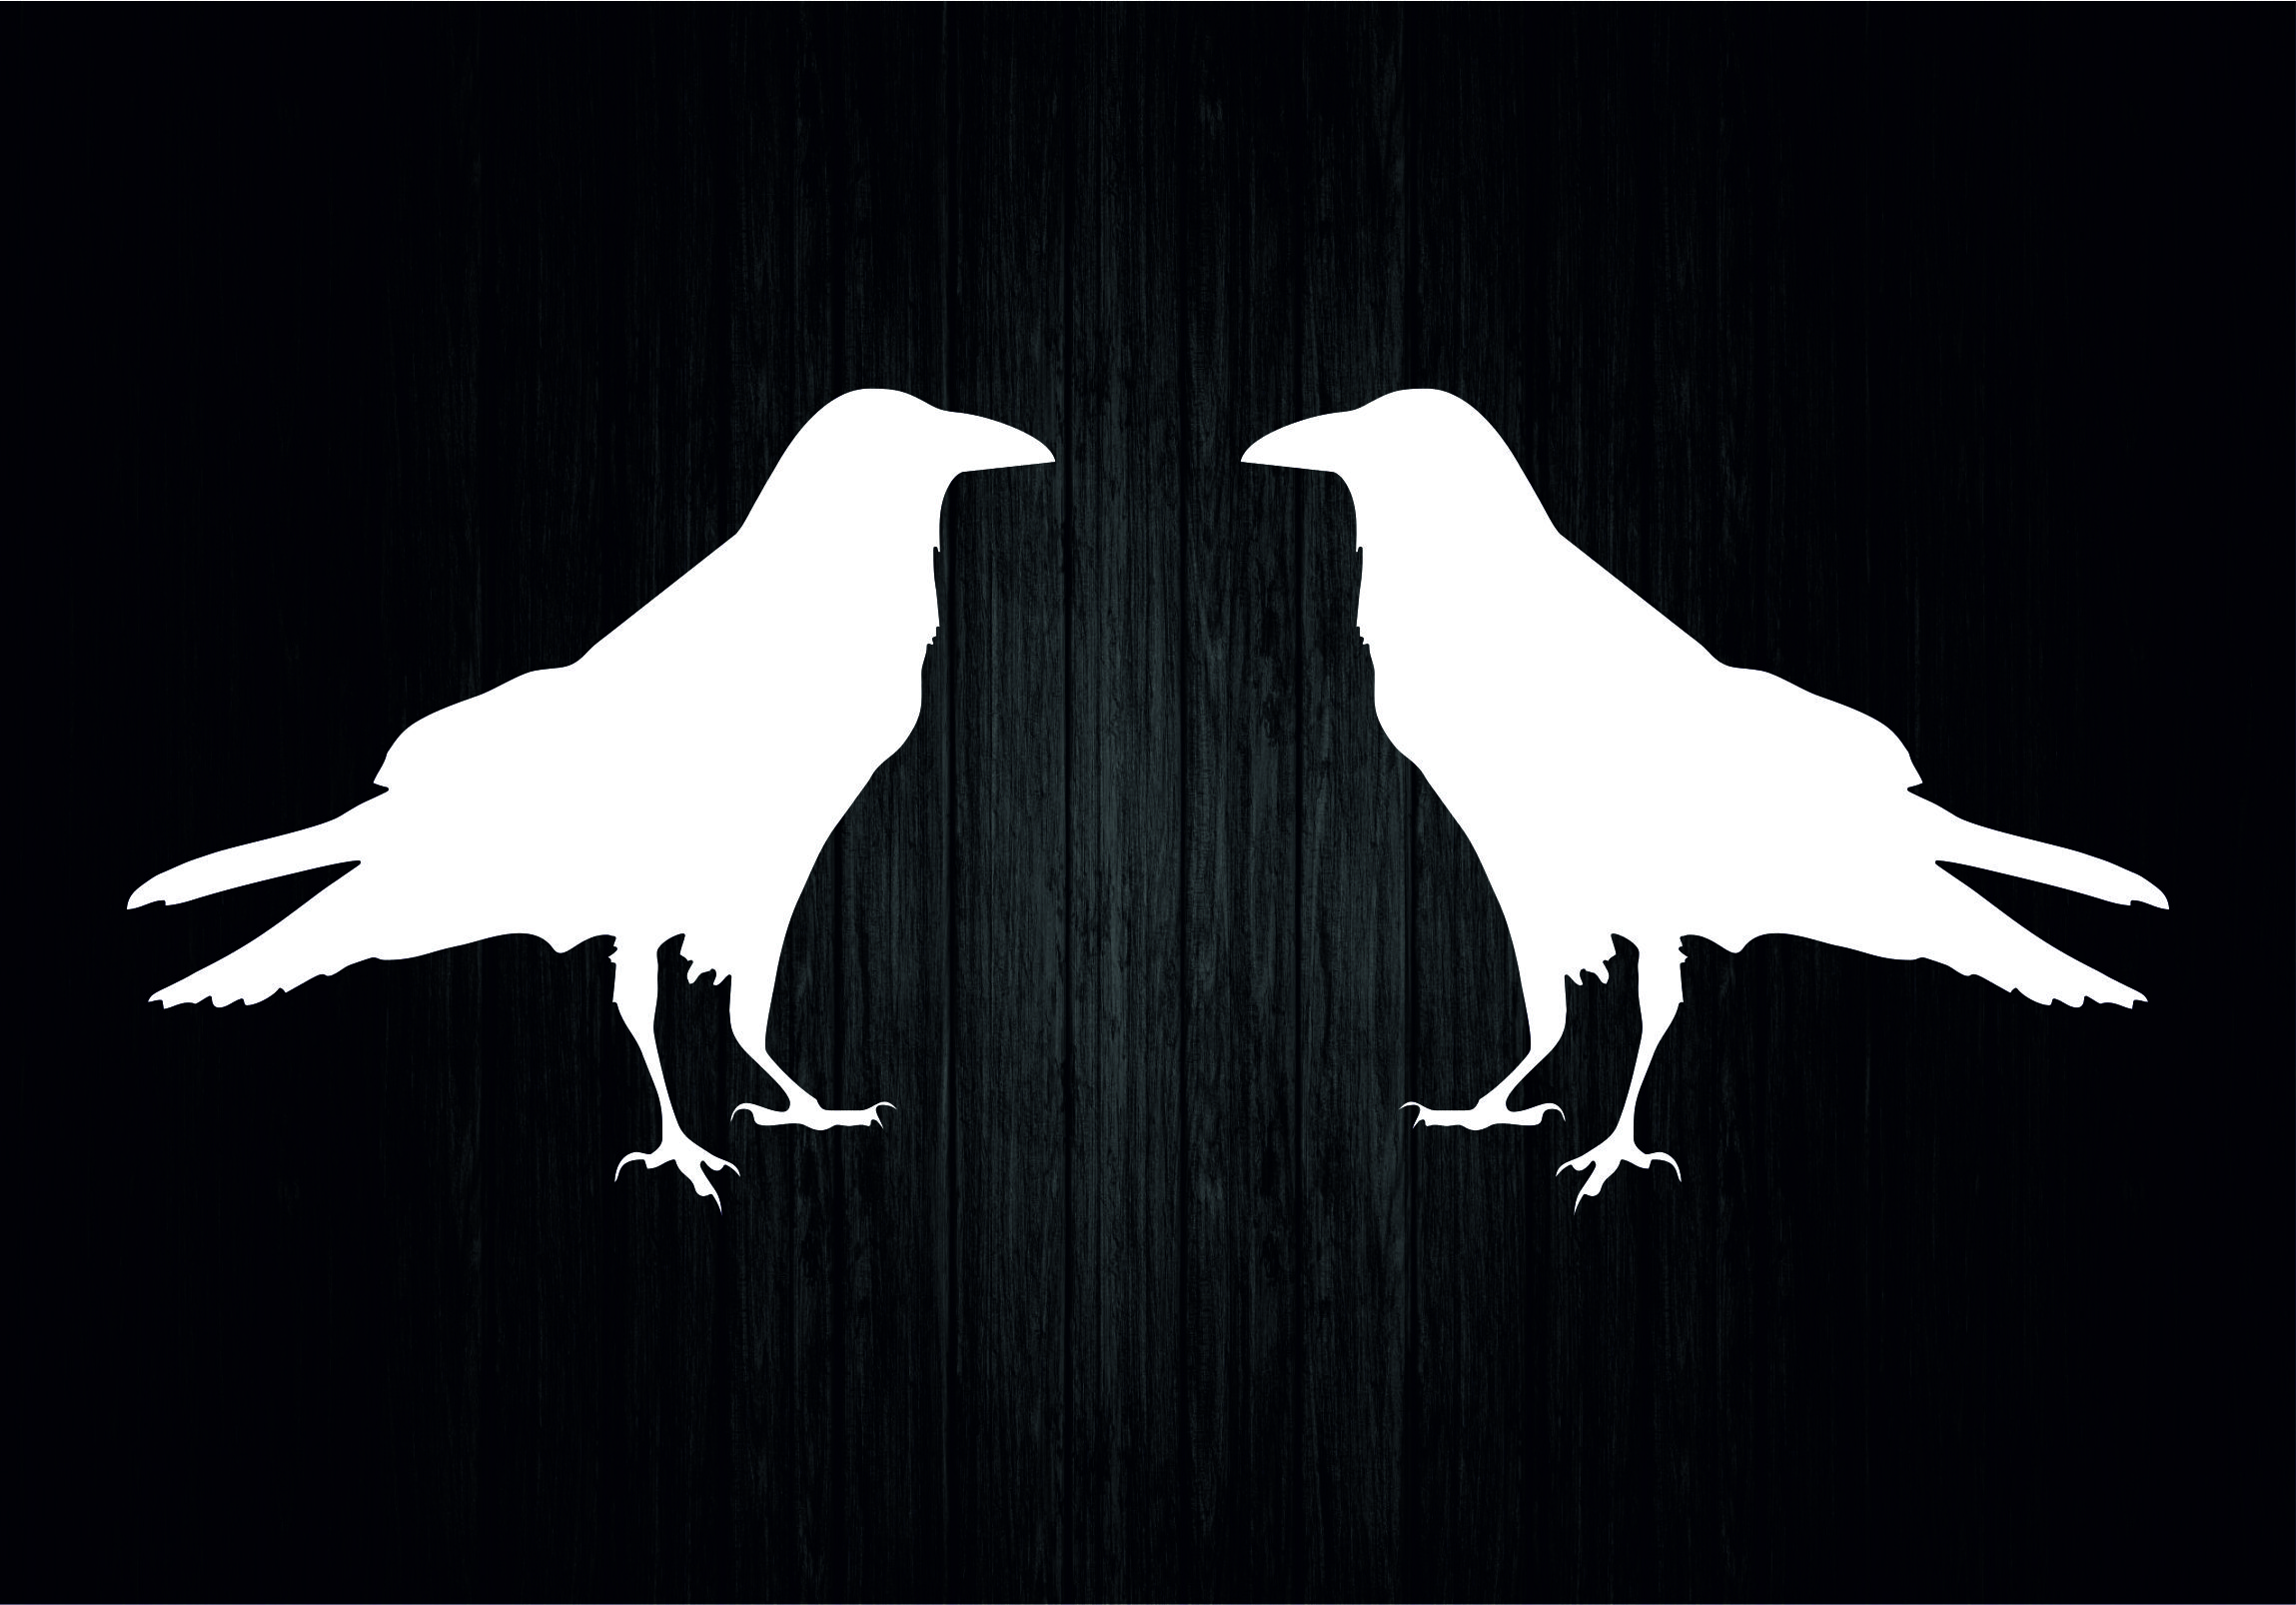 2 pegatinas cuervo cuervo viking odin wikinger cuervo moto coche r5 - Imagen 1 de 1